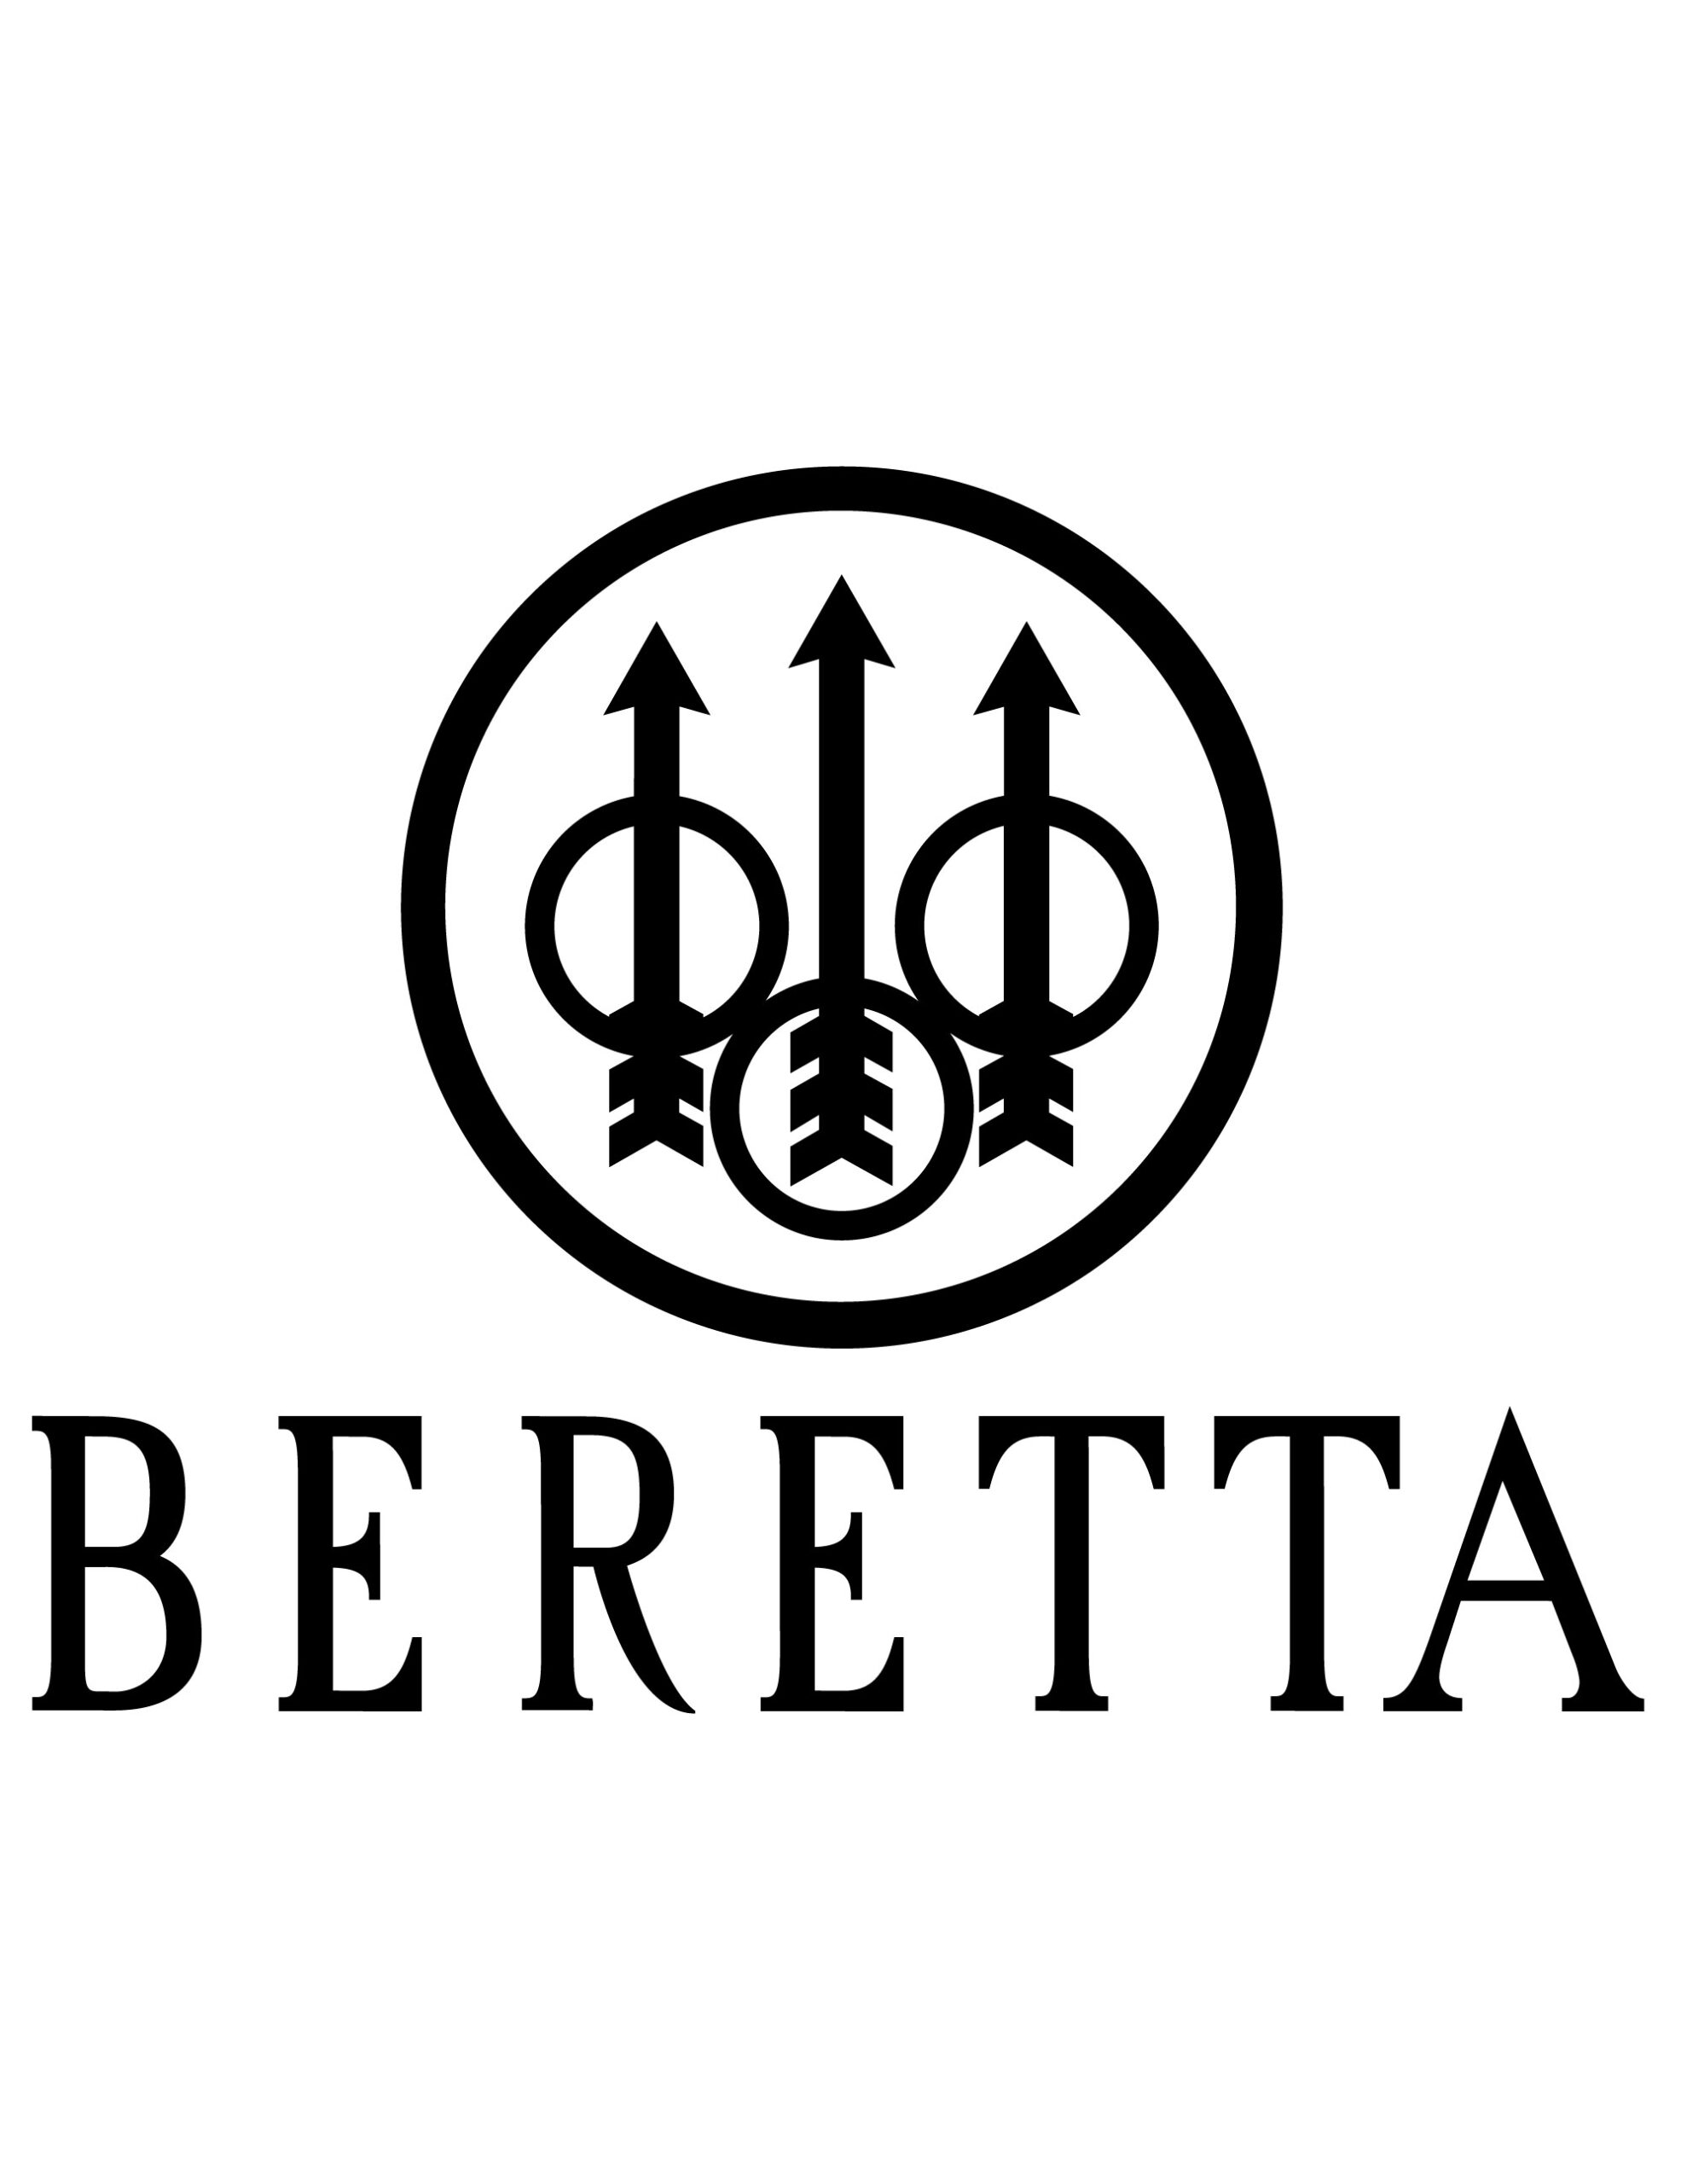 Picture of the Beretta Logo Trident symbol